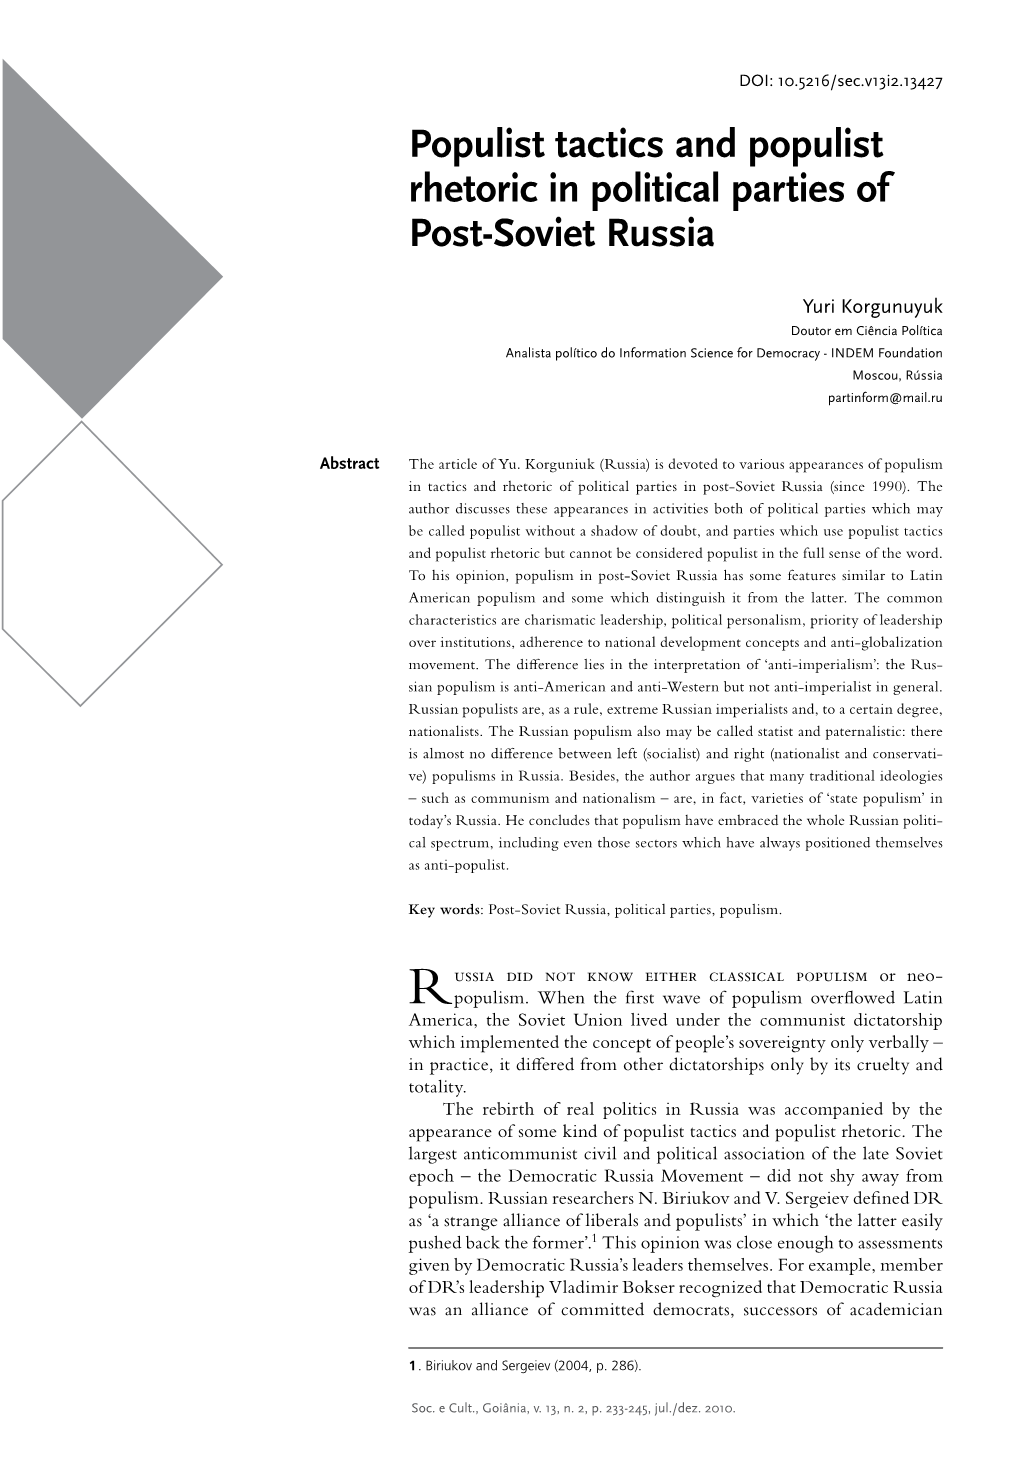 Populist Tactics and Populist Rhetoric in Political Parties of Post-Soviet Russia